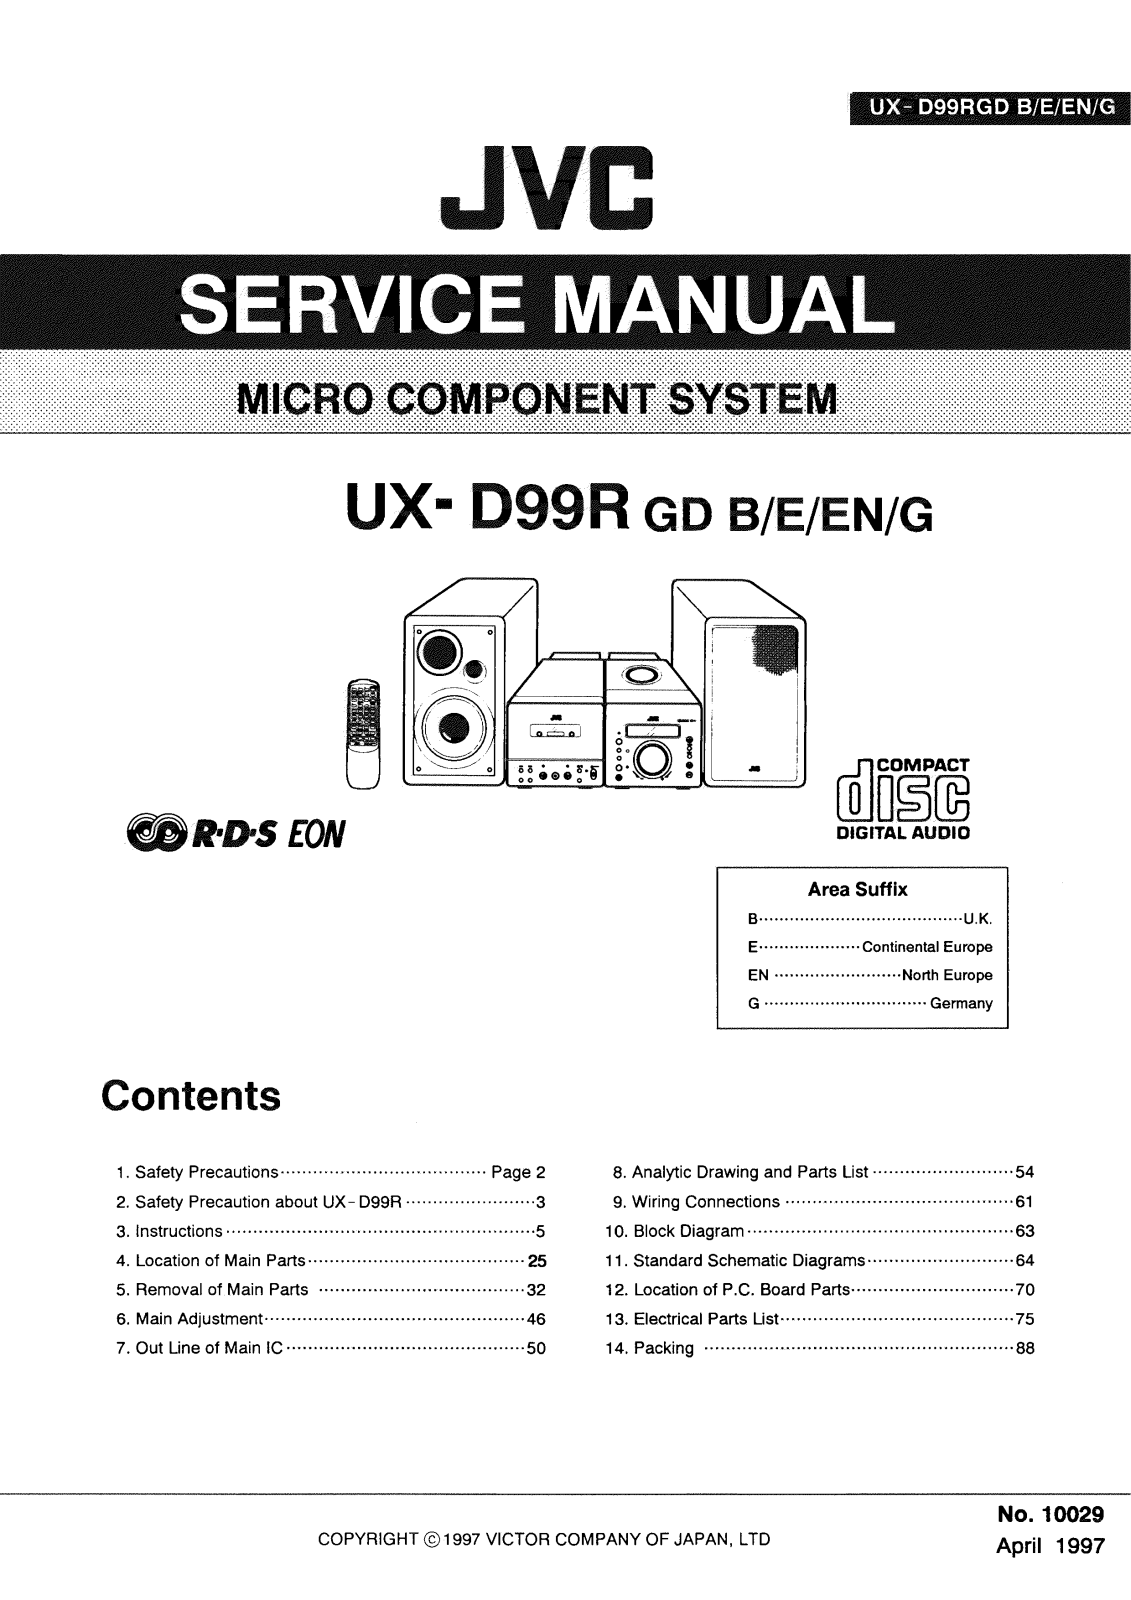 JVC UX-D99RGDB, UX-D99RGDE, UX-D99RGDEN, UX-D99RGDG Service Manual